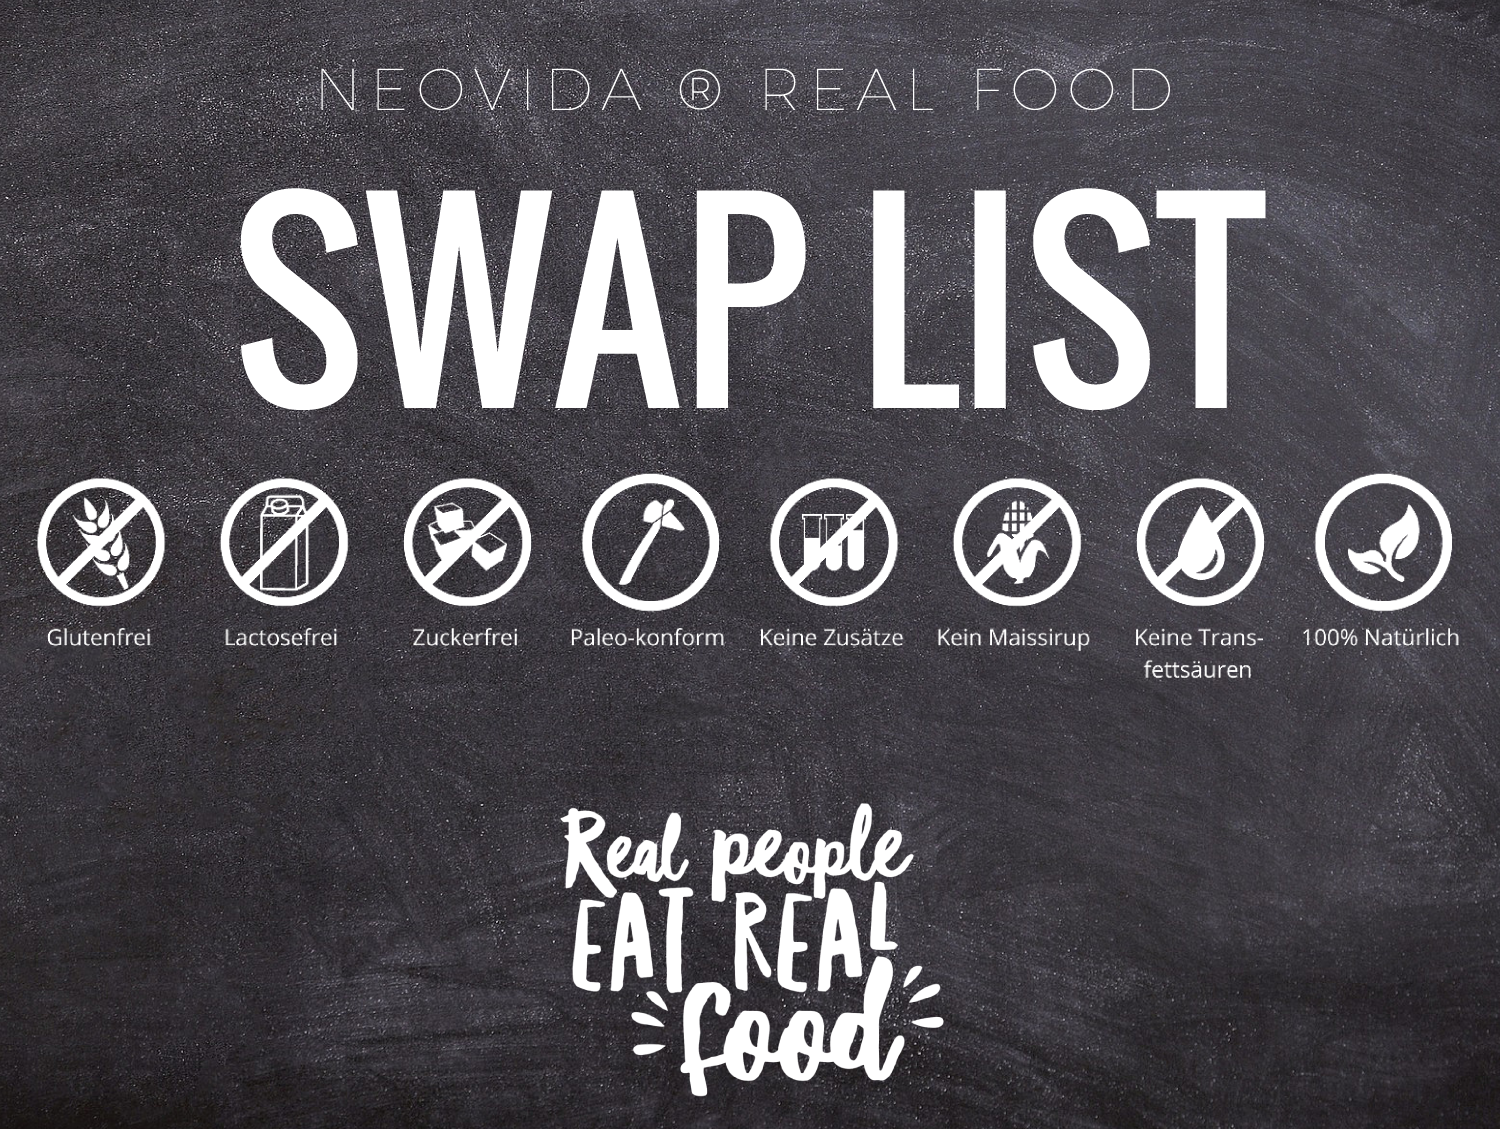 NEOVIDA ® Real Food SWAPS - Cover Header